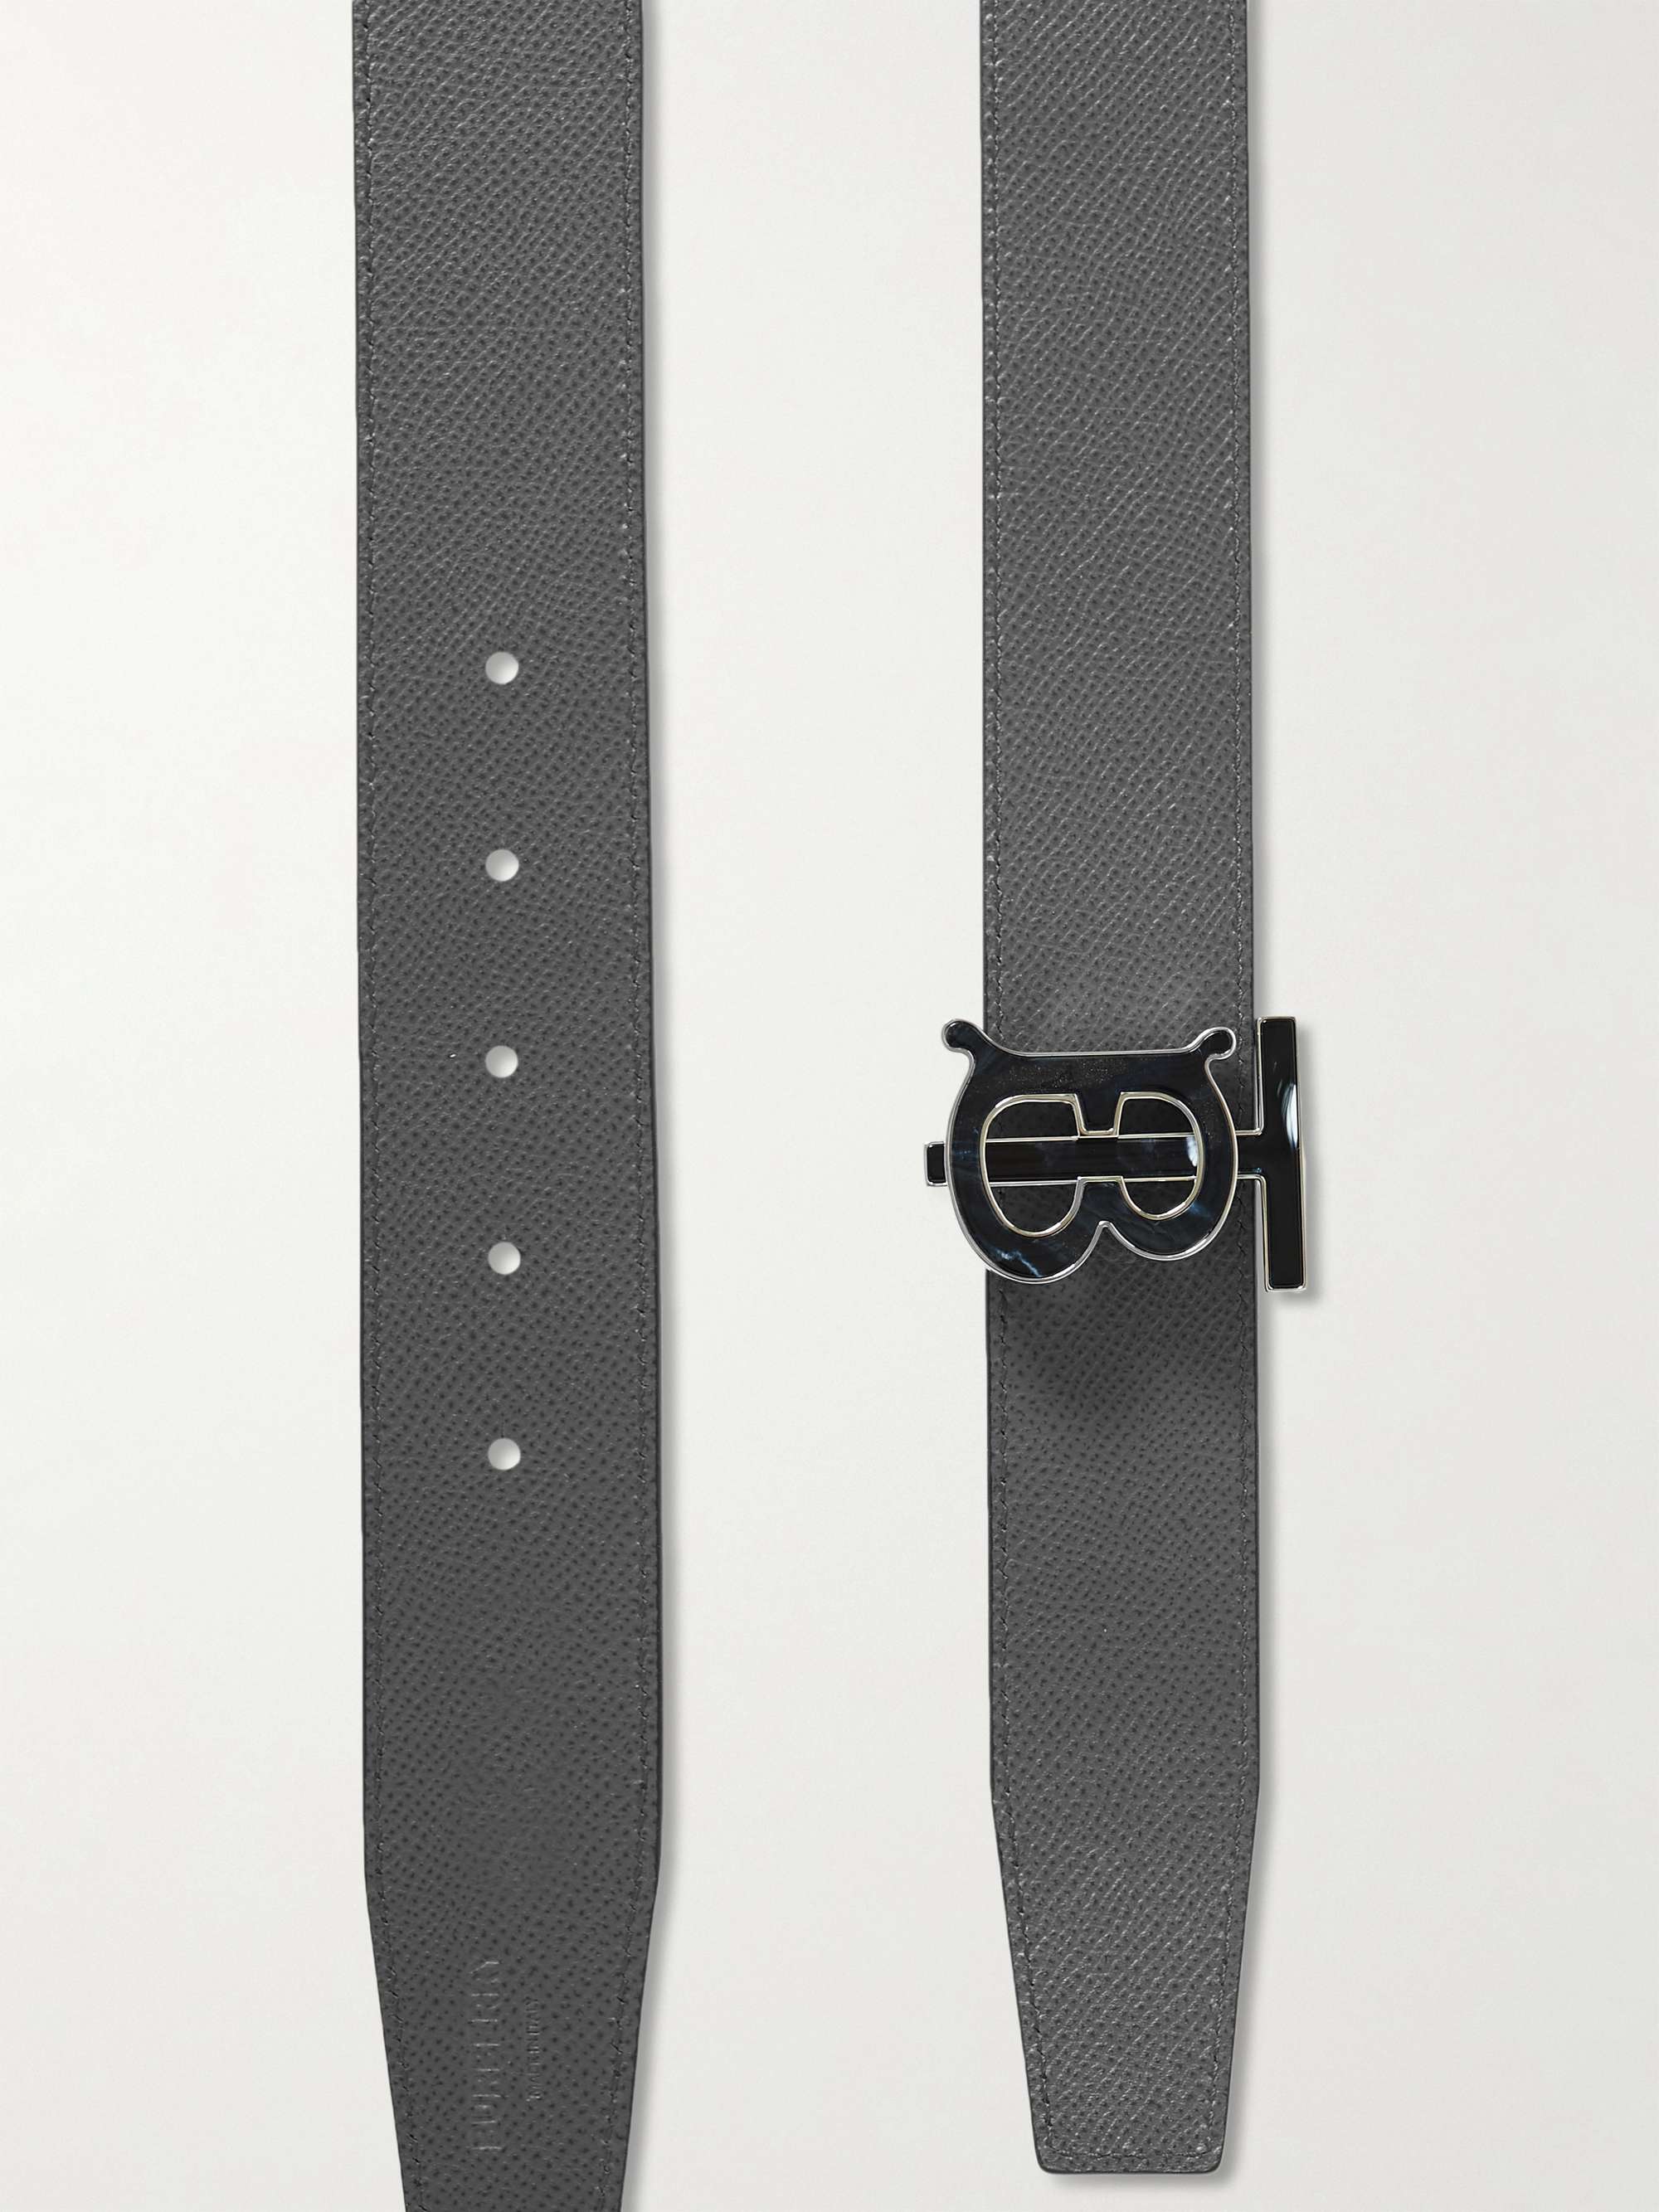 . 43.31 Leather belt Azzaronavy black 110 cm 1.38 35 mm